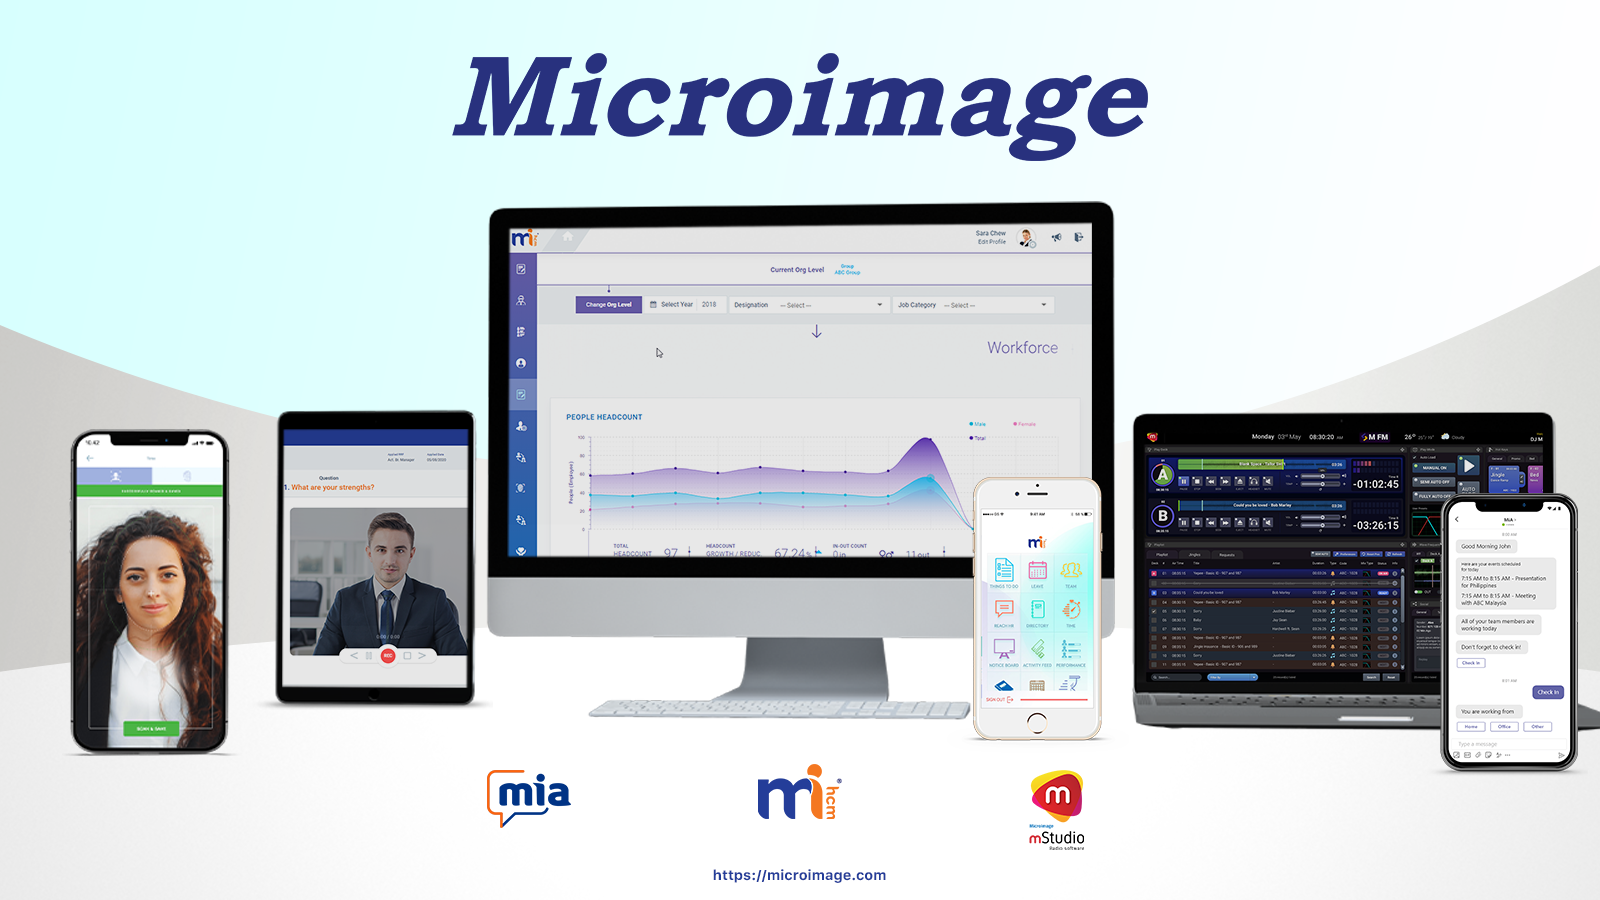 Microimage Holdings (Pvt) Ltd